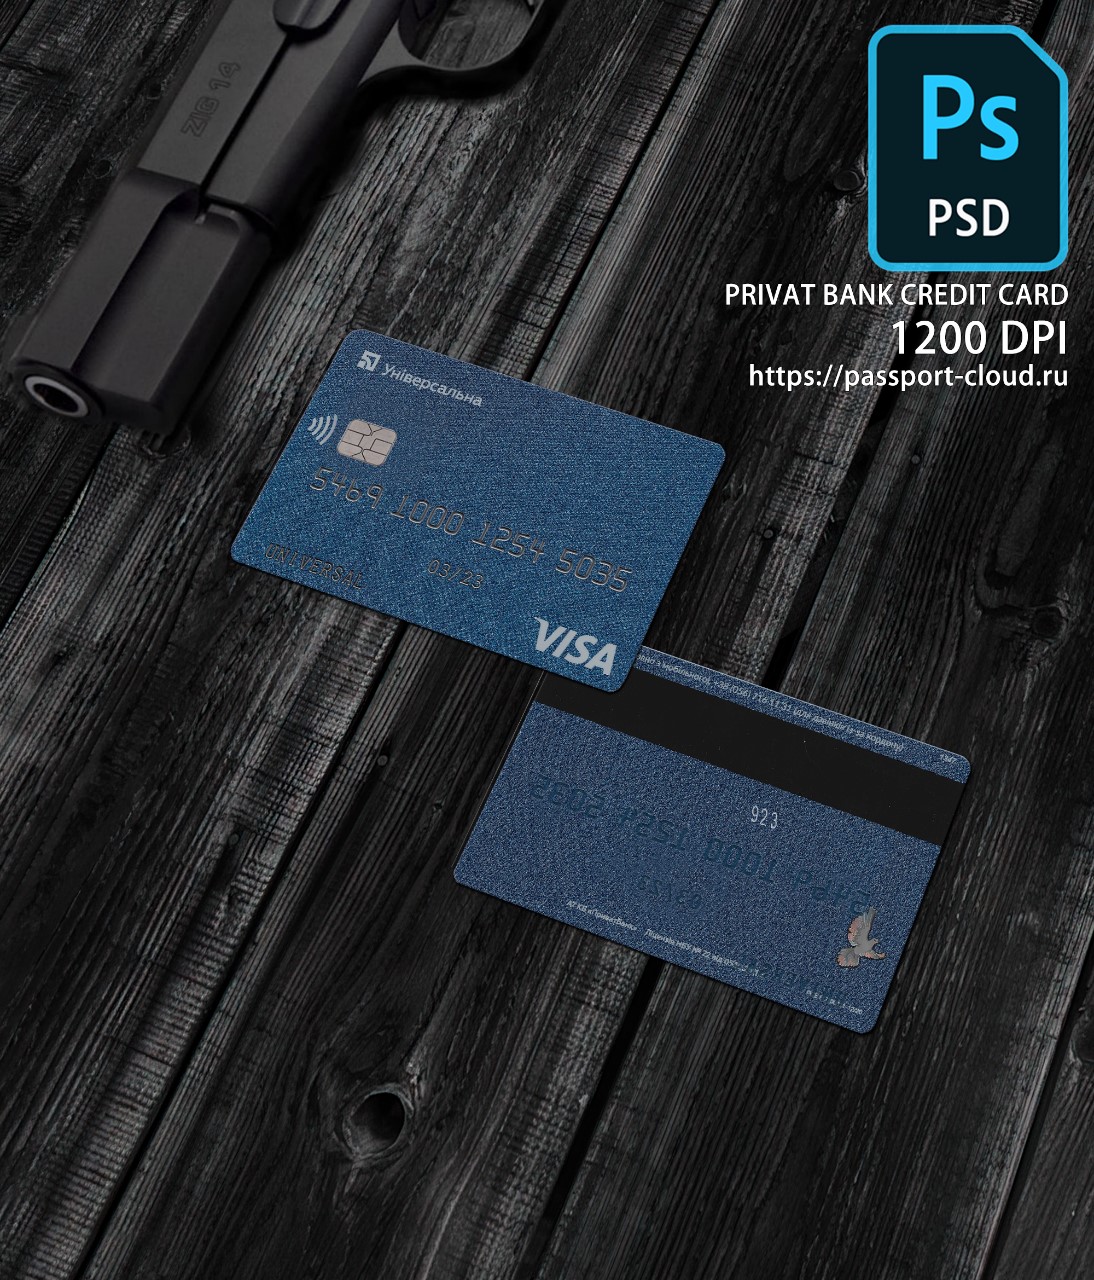 PrivatBank Credit Card PSD1